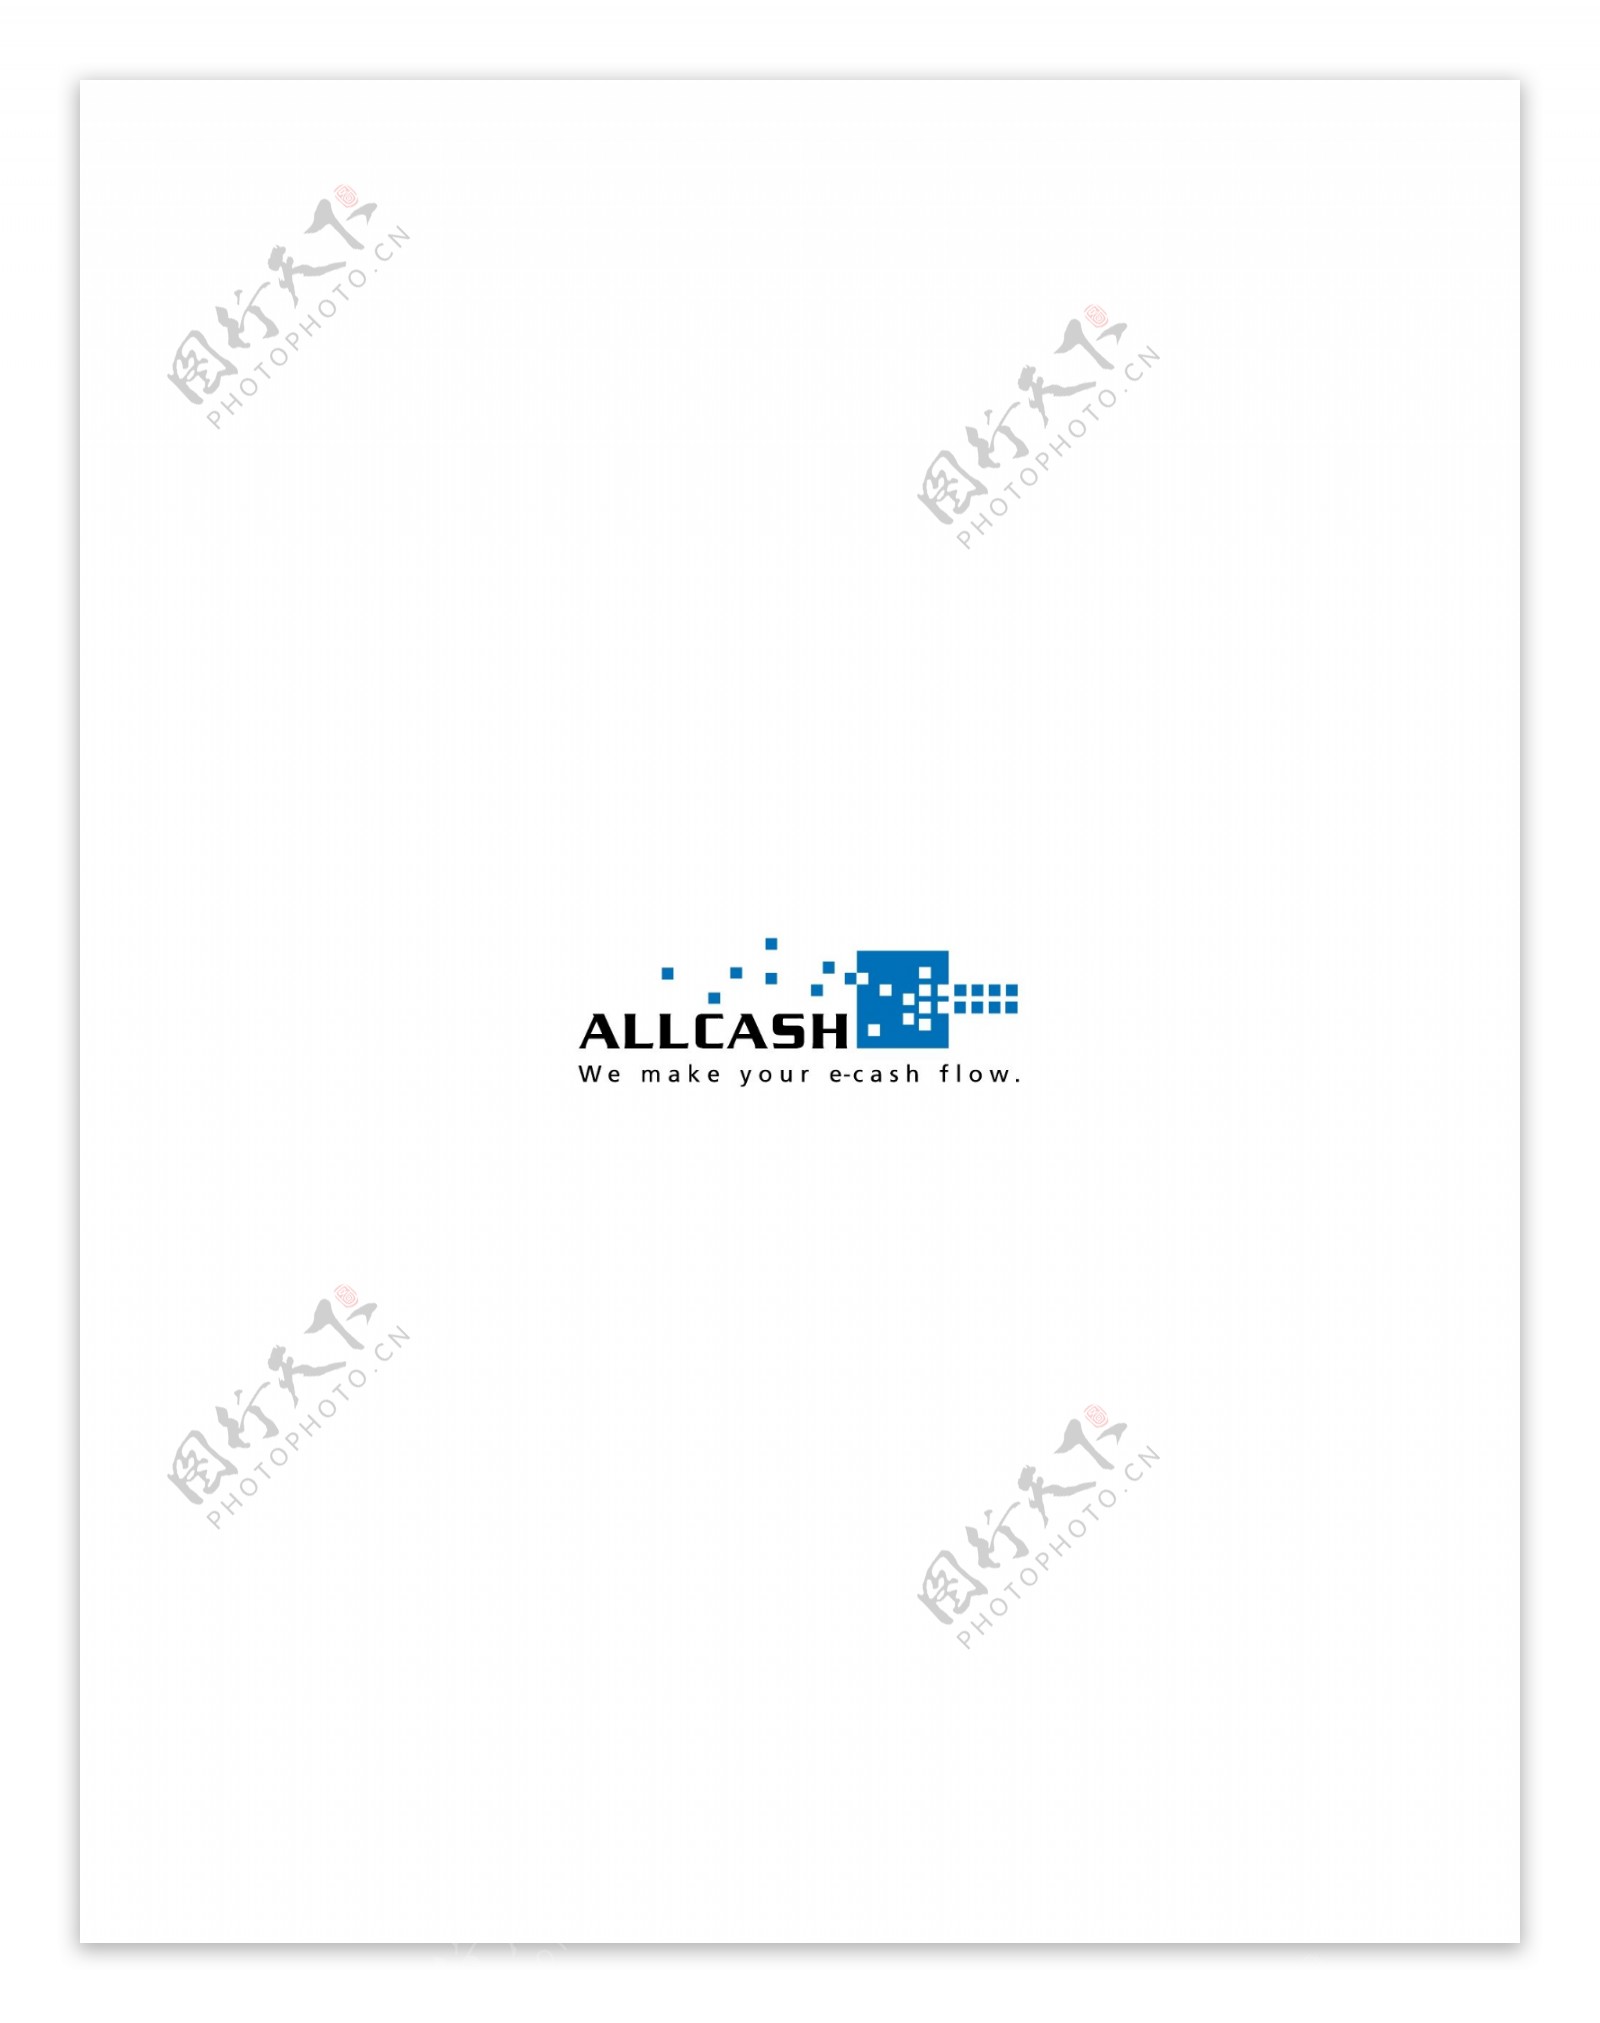 Allcashlogo设计欣赏IT公司LOGO标志Allcash下载标志设计欣赏